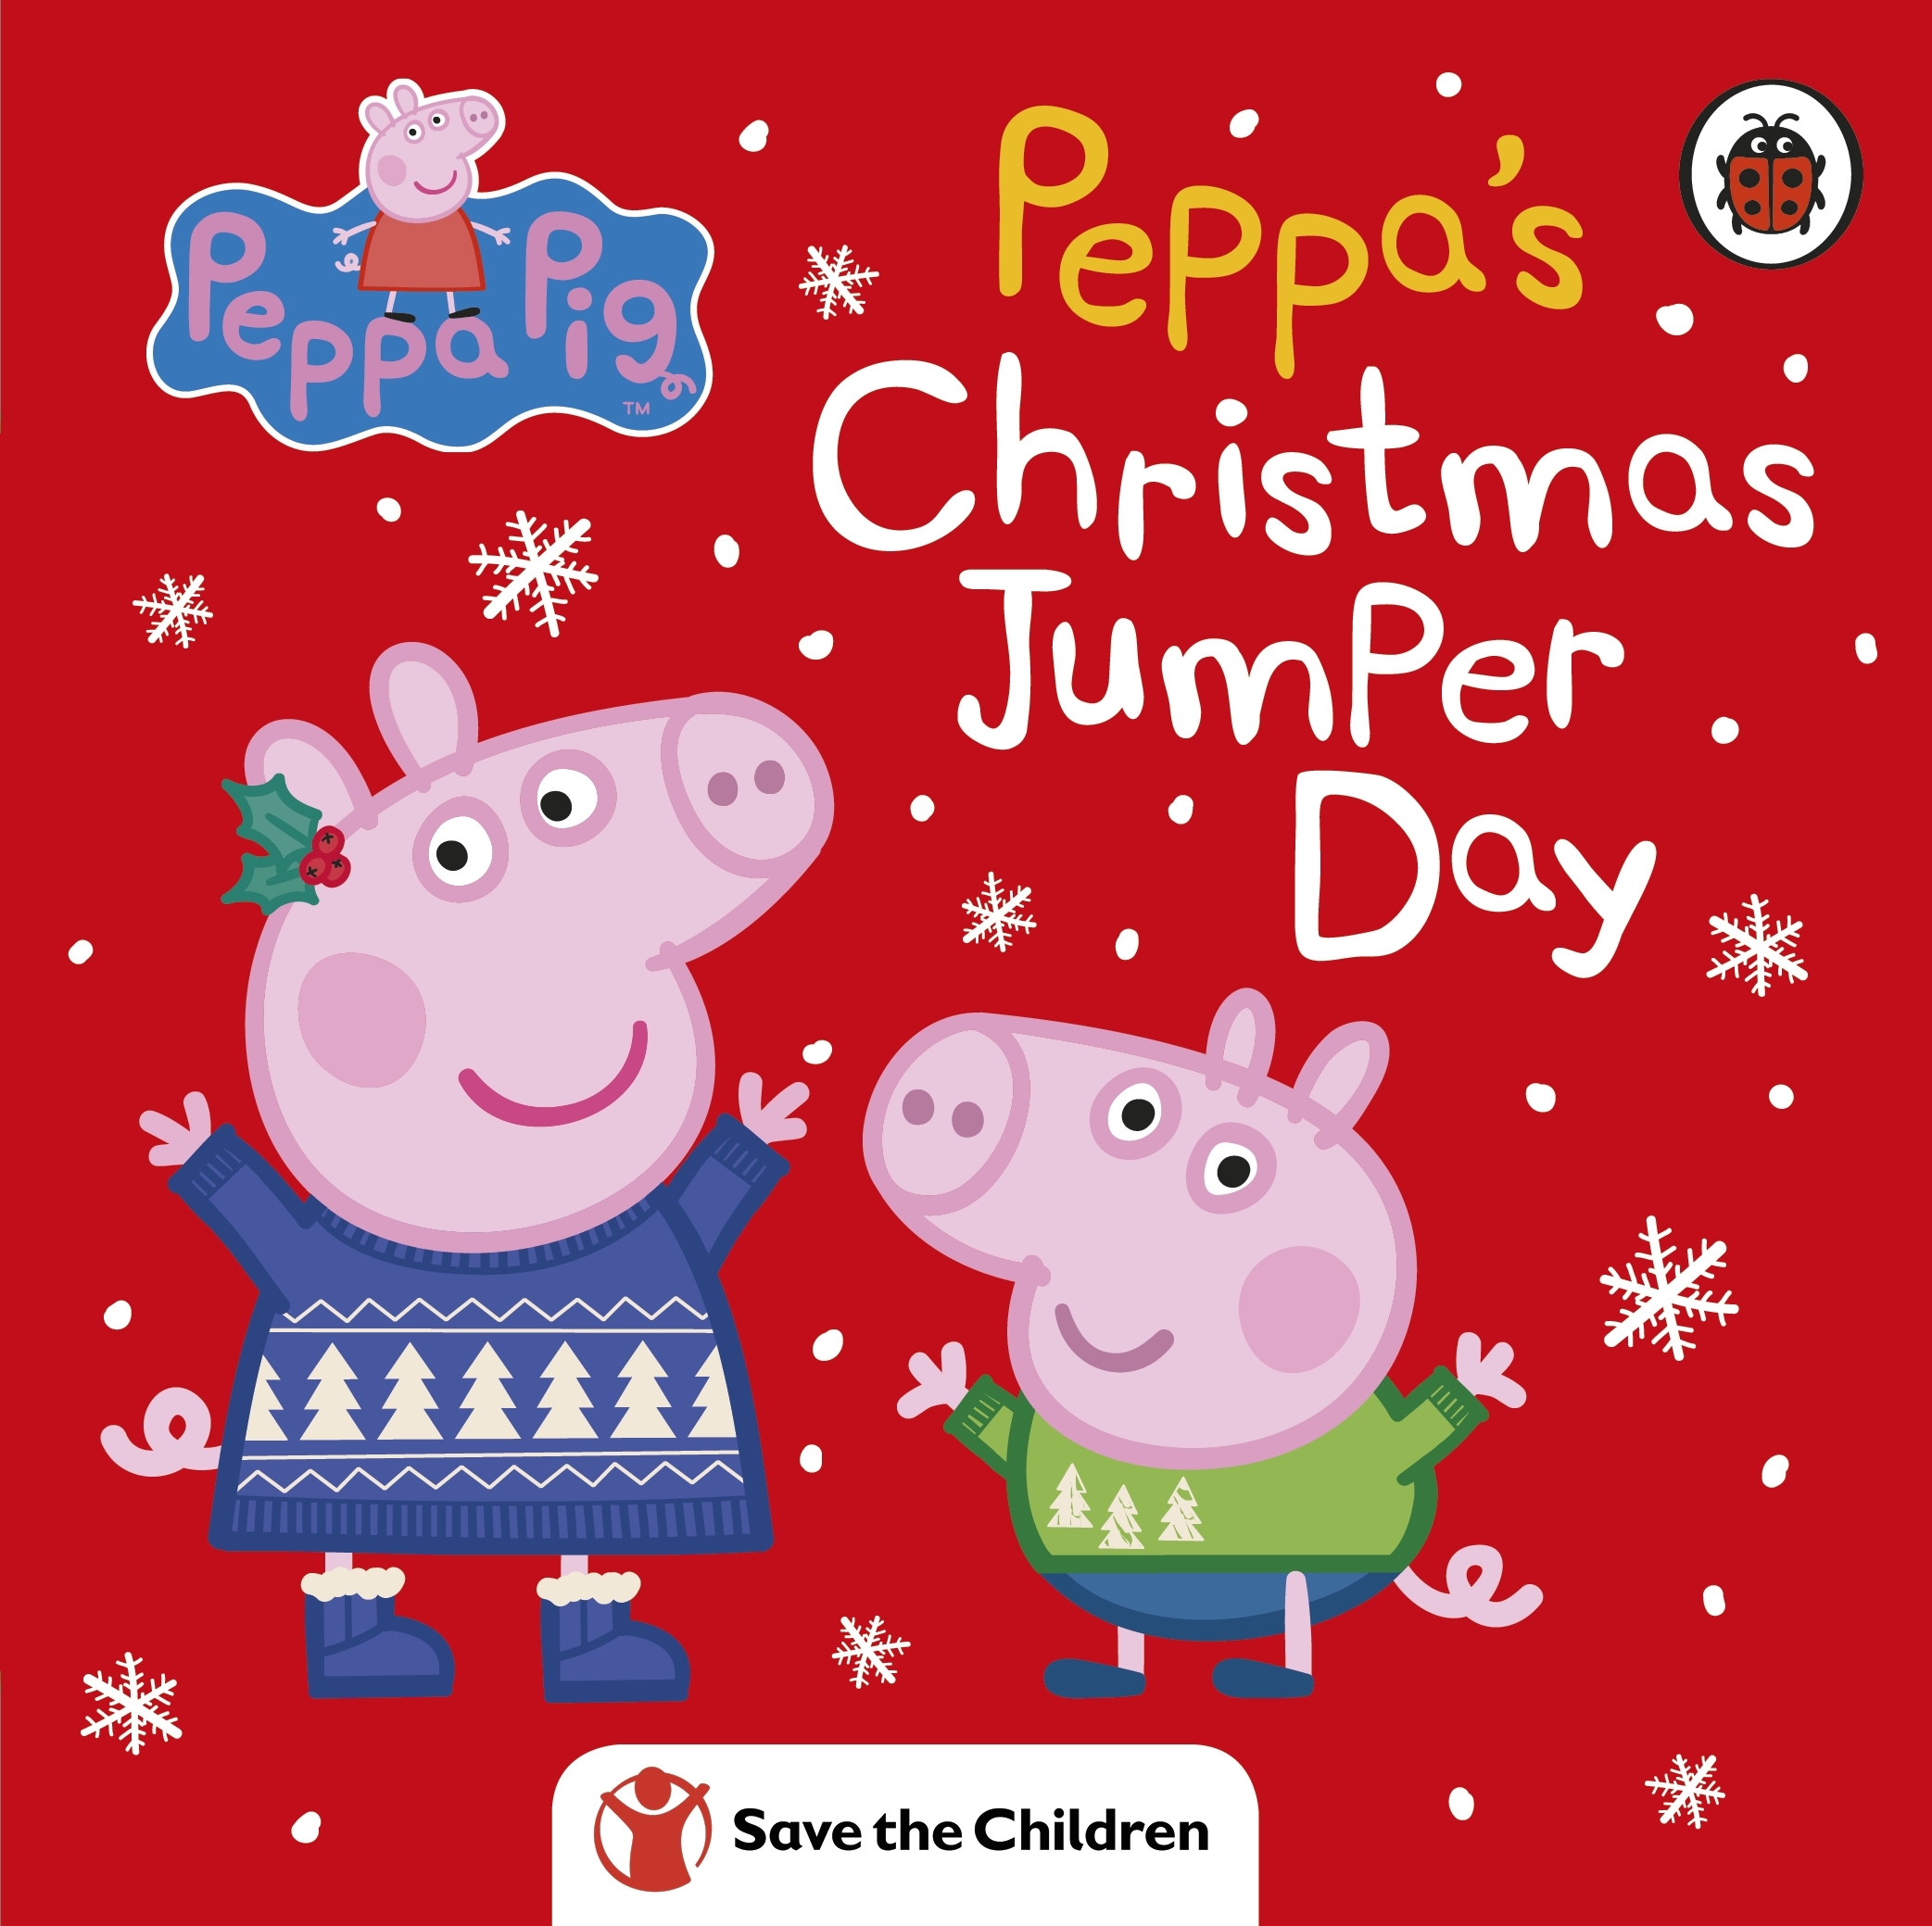 Peppa Pig: Peppa's Christmas Jumper Day by Peppa Pig - Penguin Books Australia